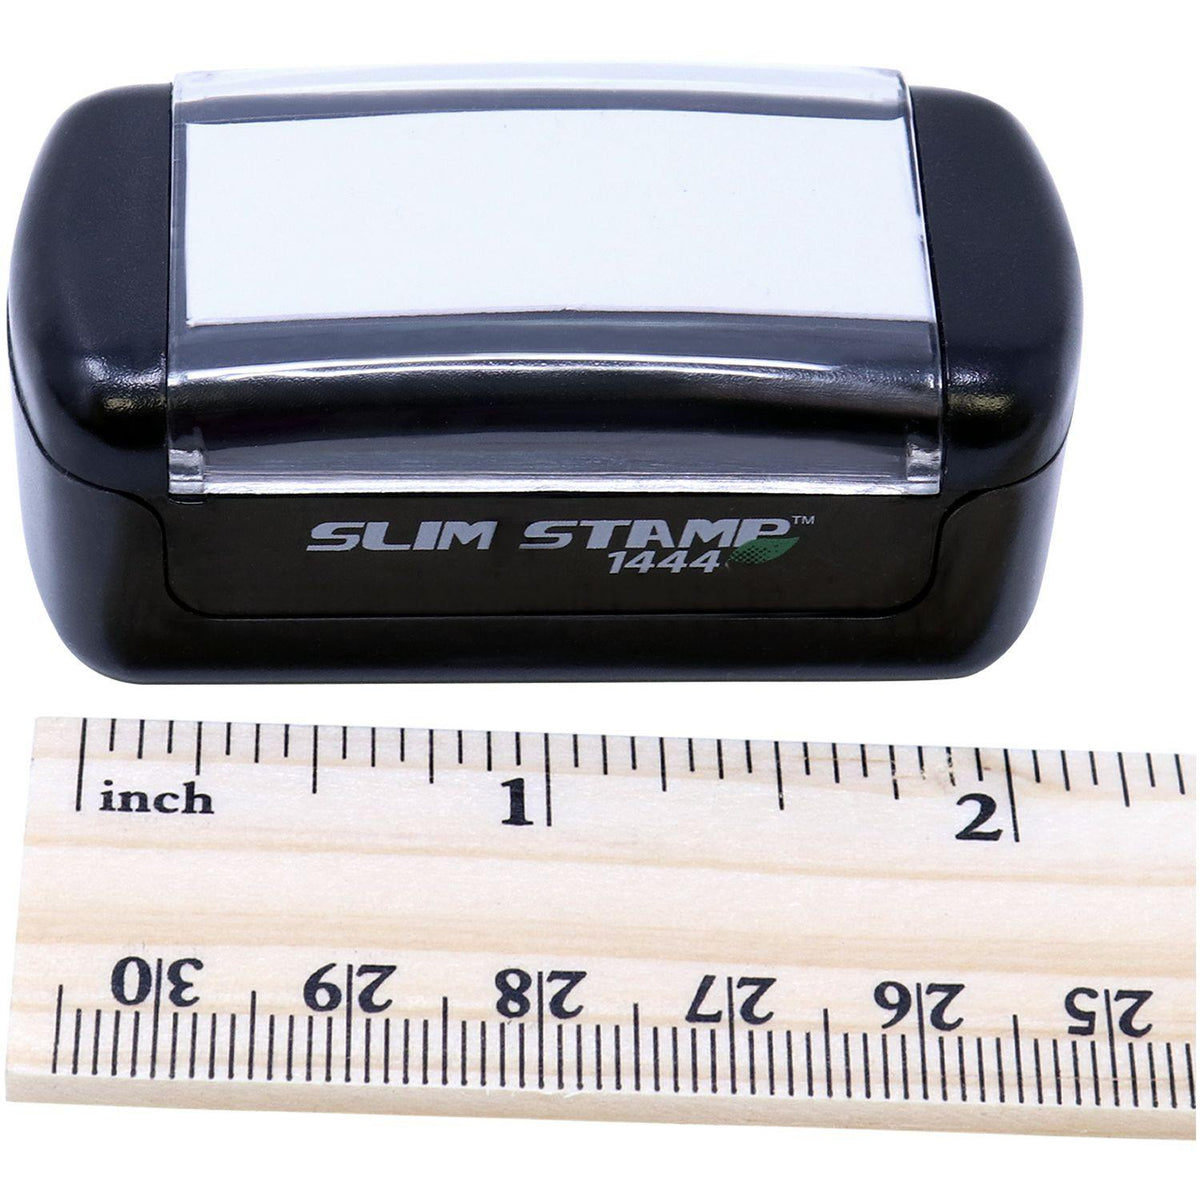 Measurement Slim Pre Inked Evidence Stamp with Ruler